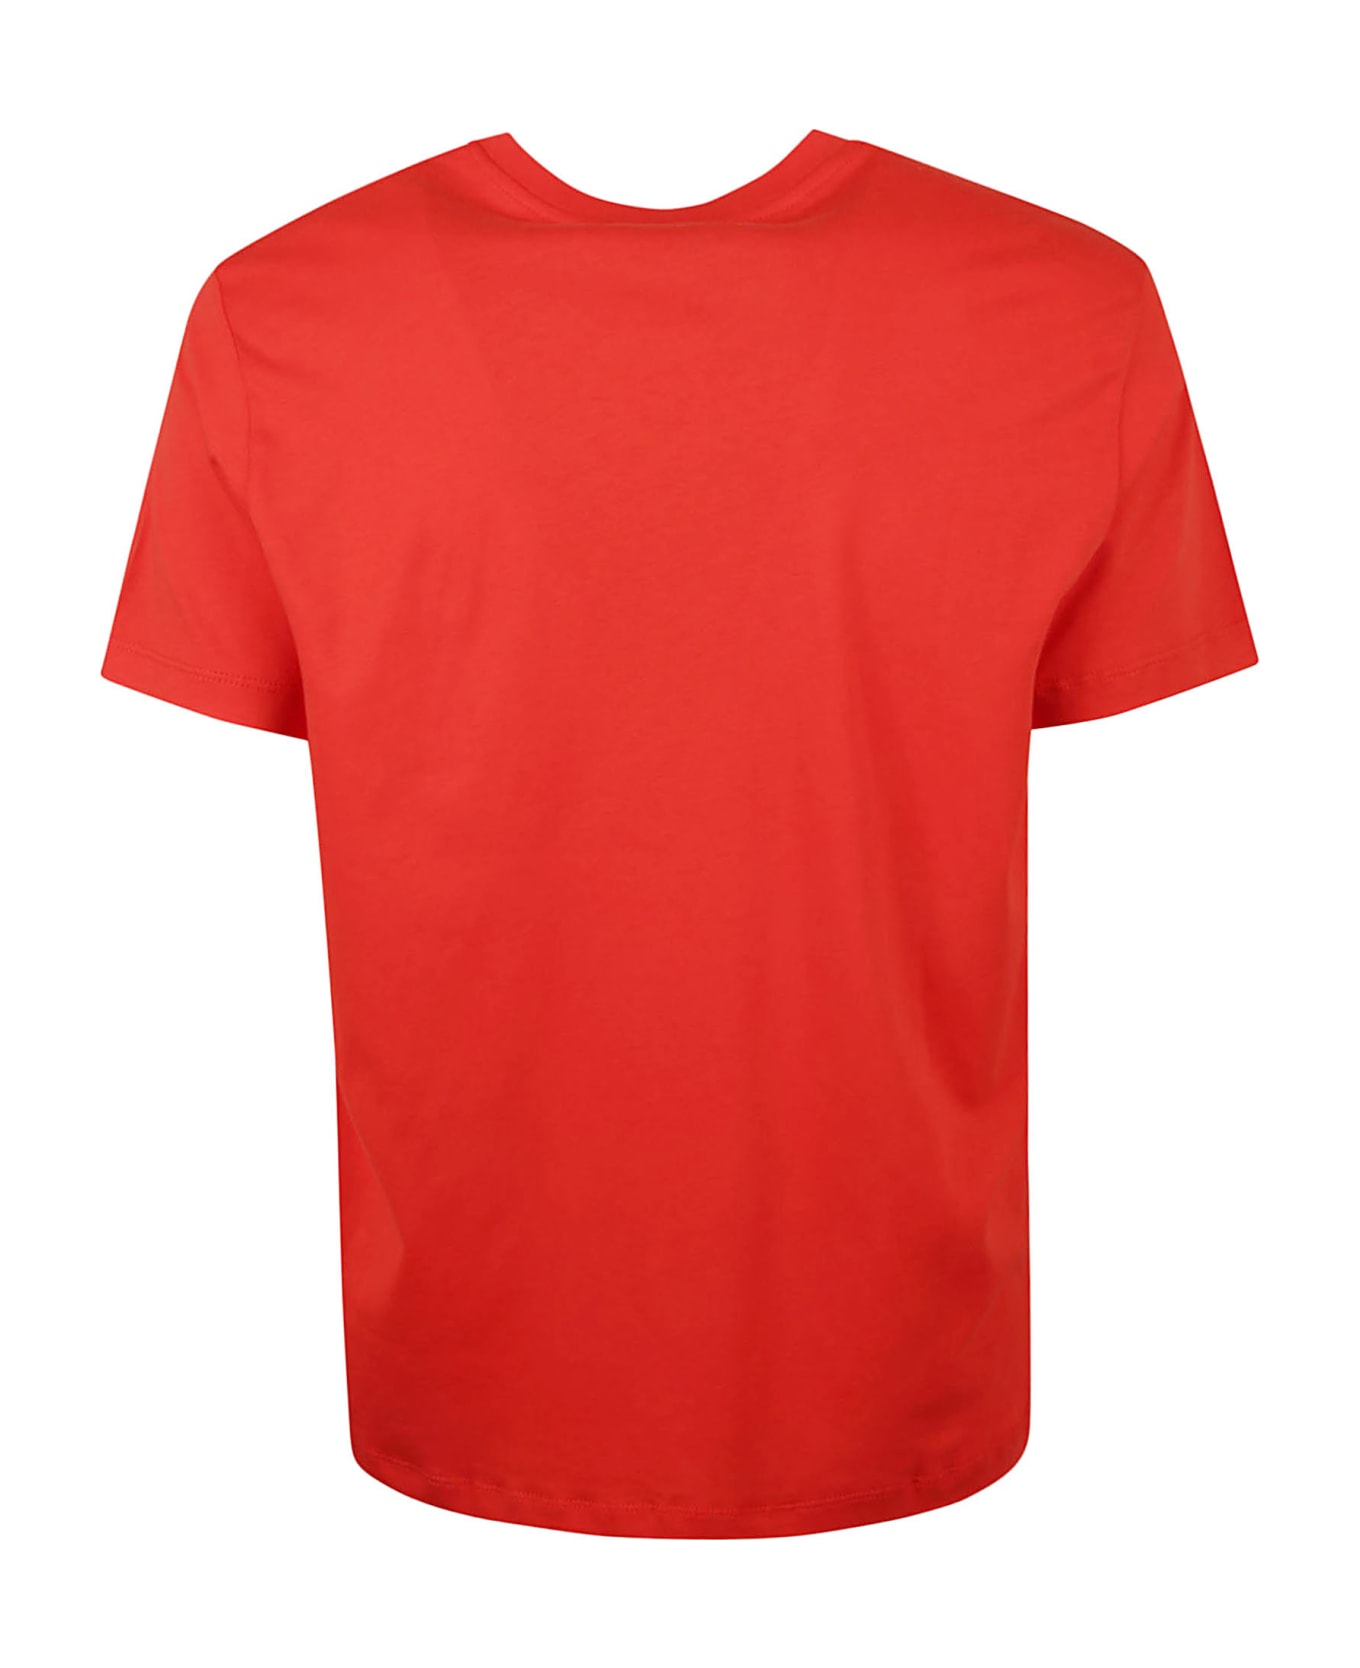 Vilebrequin Logo Print Regular T-shirt - Red